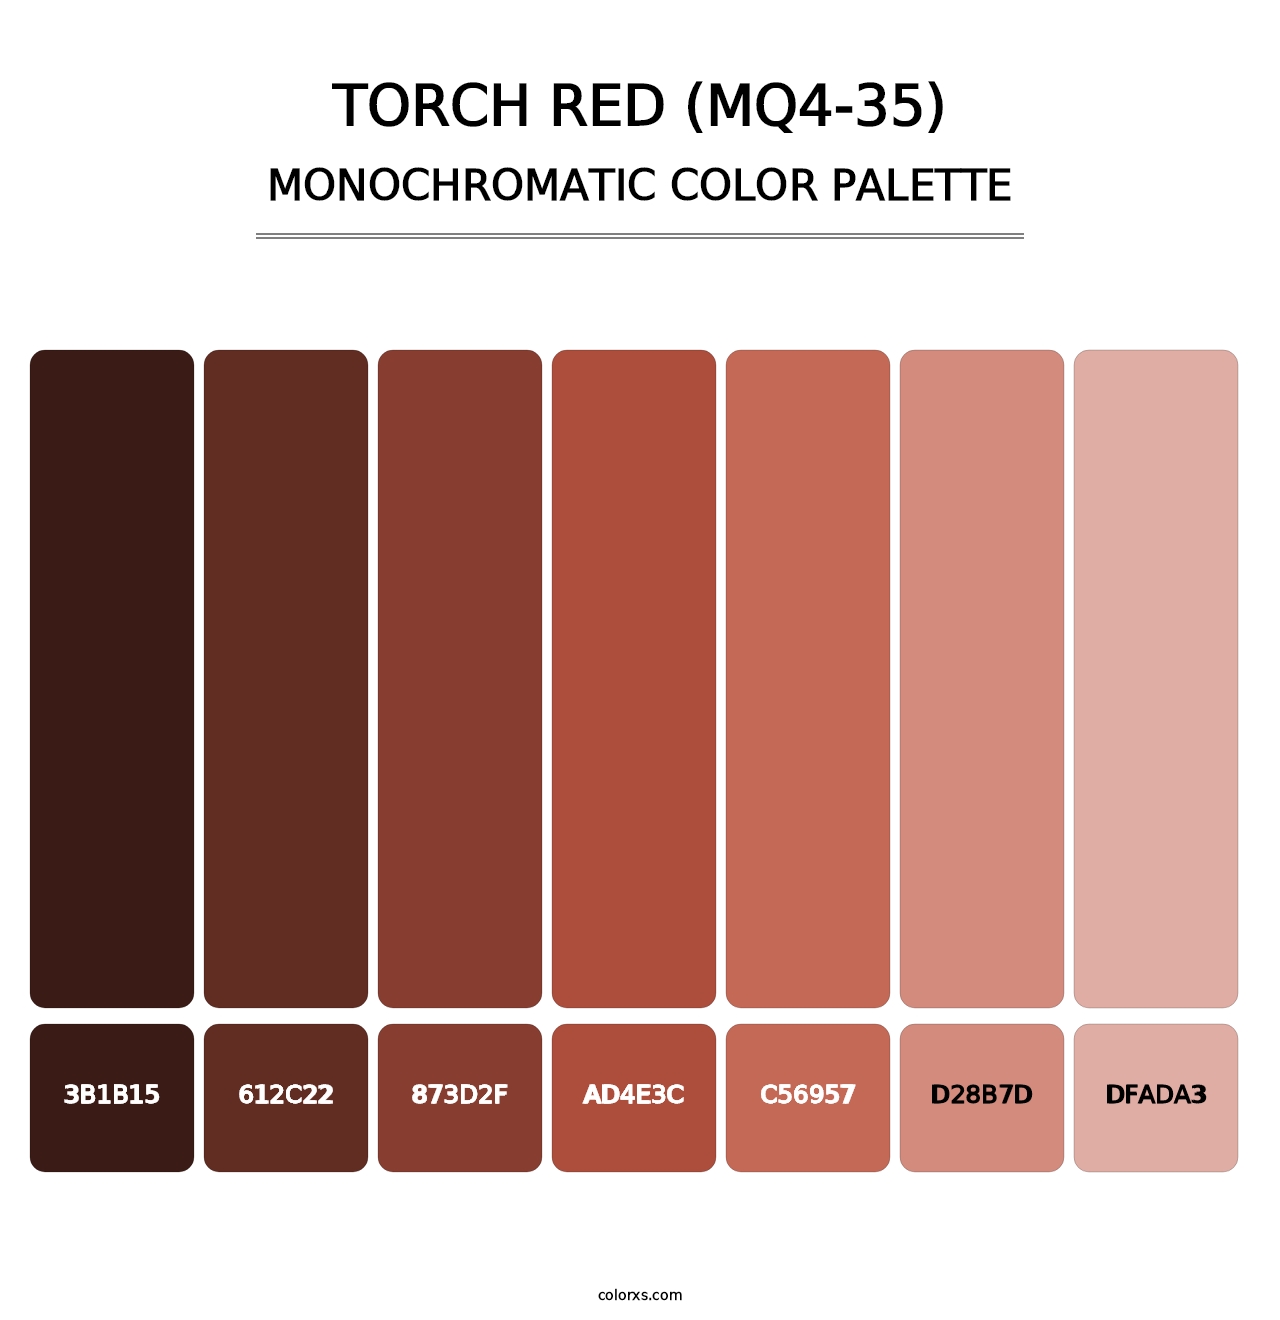 Torch Red (MQ4-35) - Monochromatic Color Palette